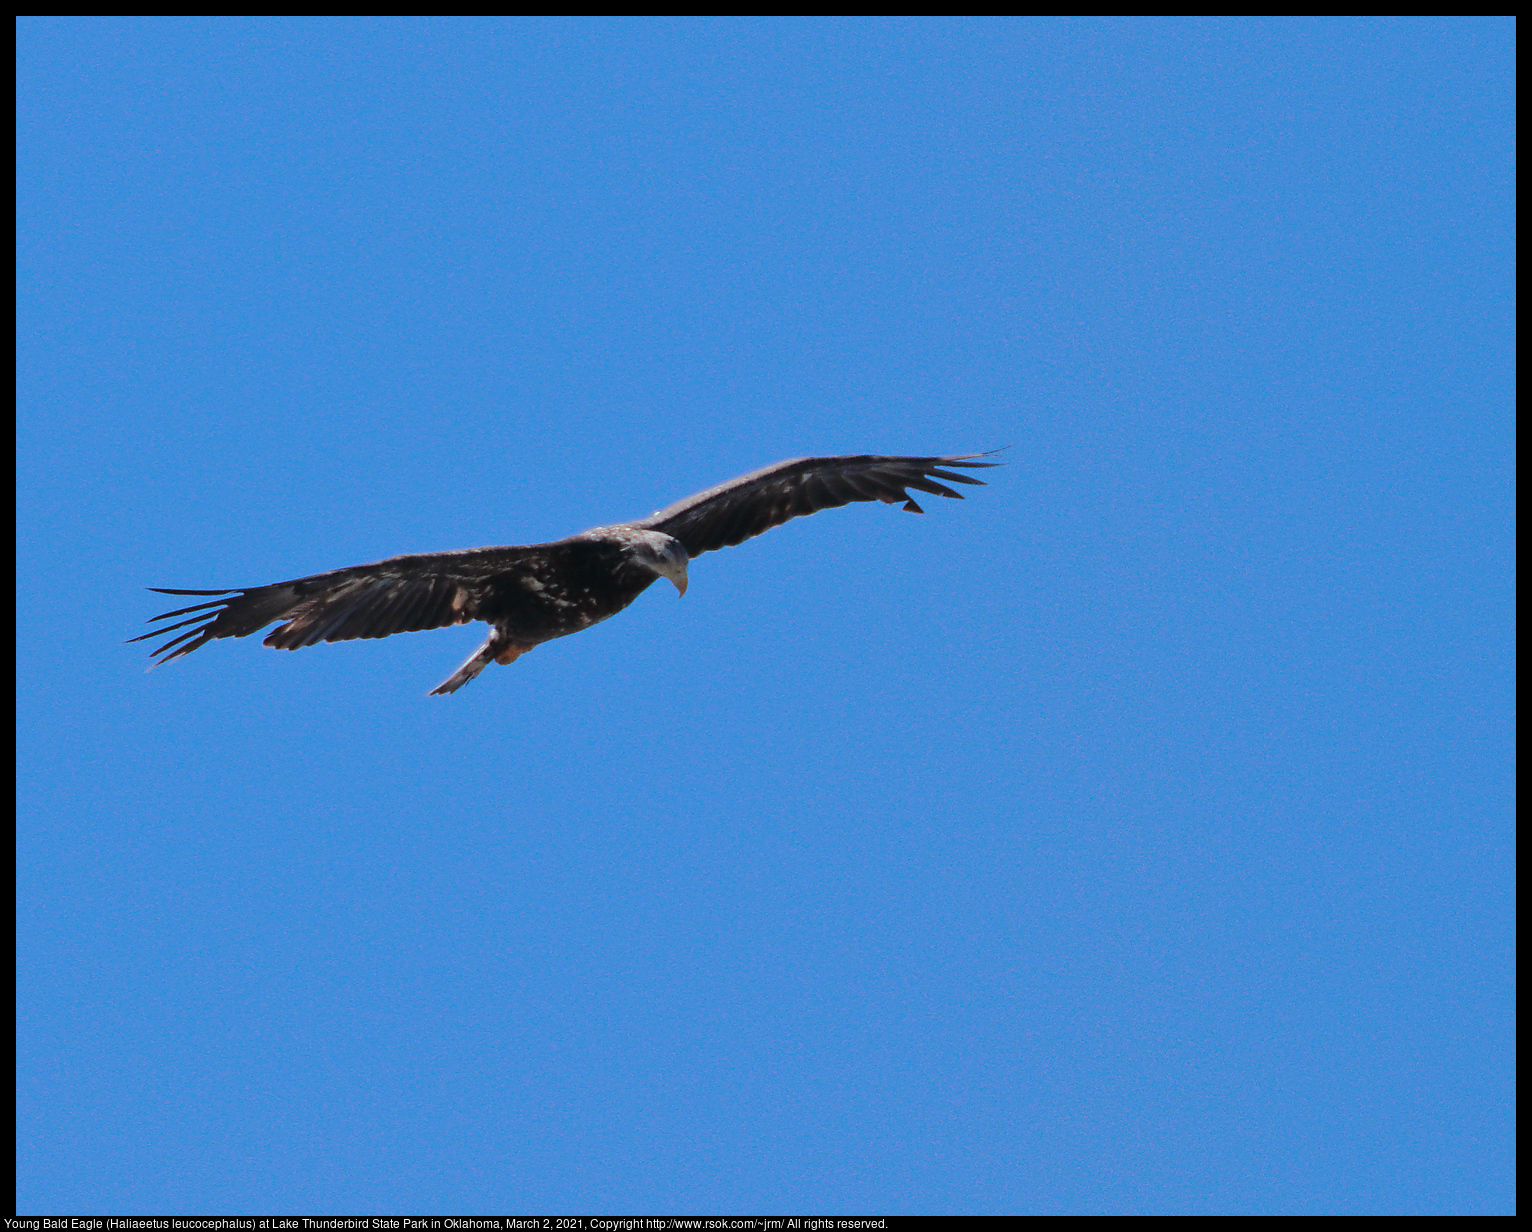 Young Bald Eagle (Haliaeetus leucocephalus) at Lake Thunderbird State Park in Oklahoma, March 2, 2021